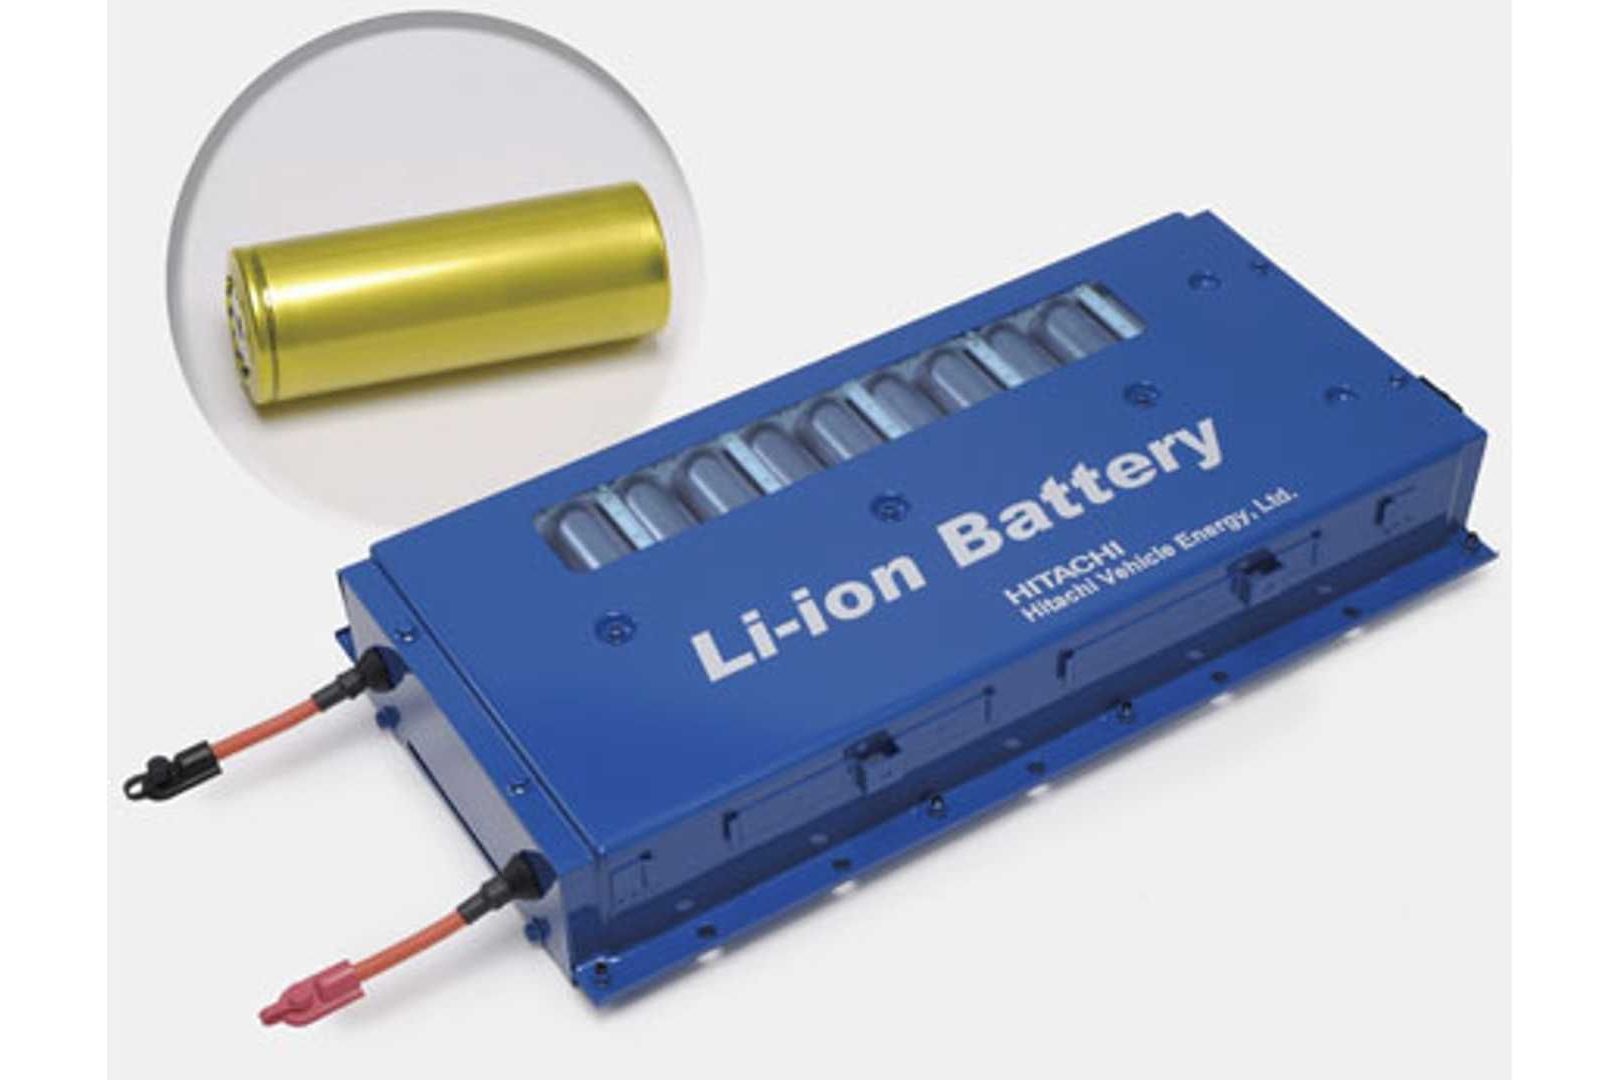 Electrical battery. Литий-ионные аккумуляторы (li-ion). Батареи аккумуляторные литий-ионные. Литий-ионный аккумулятор 18650. Батарея ионная литий на36в15амперкупить.